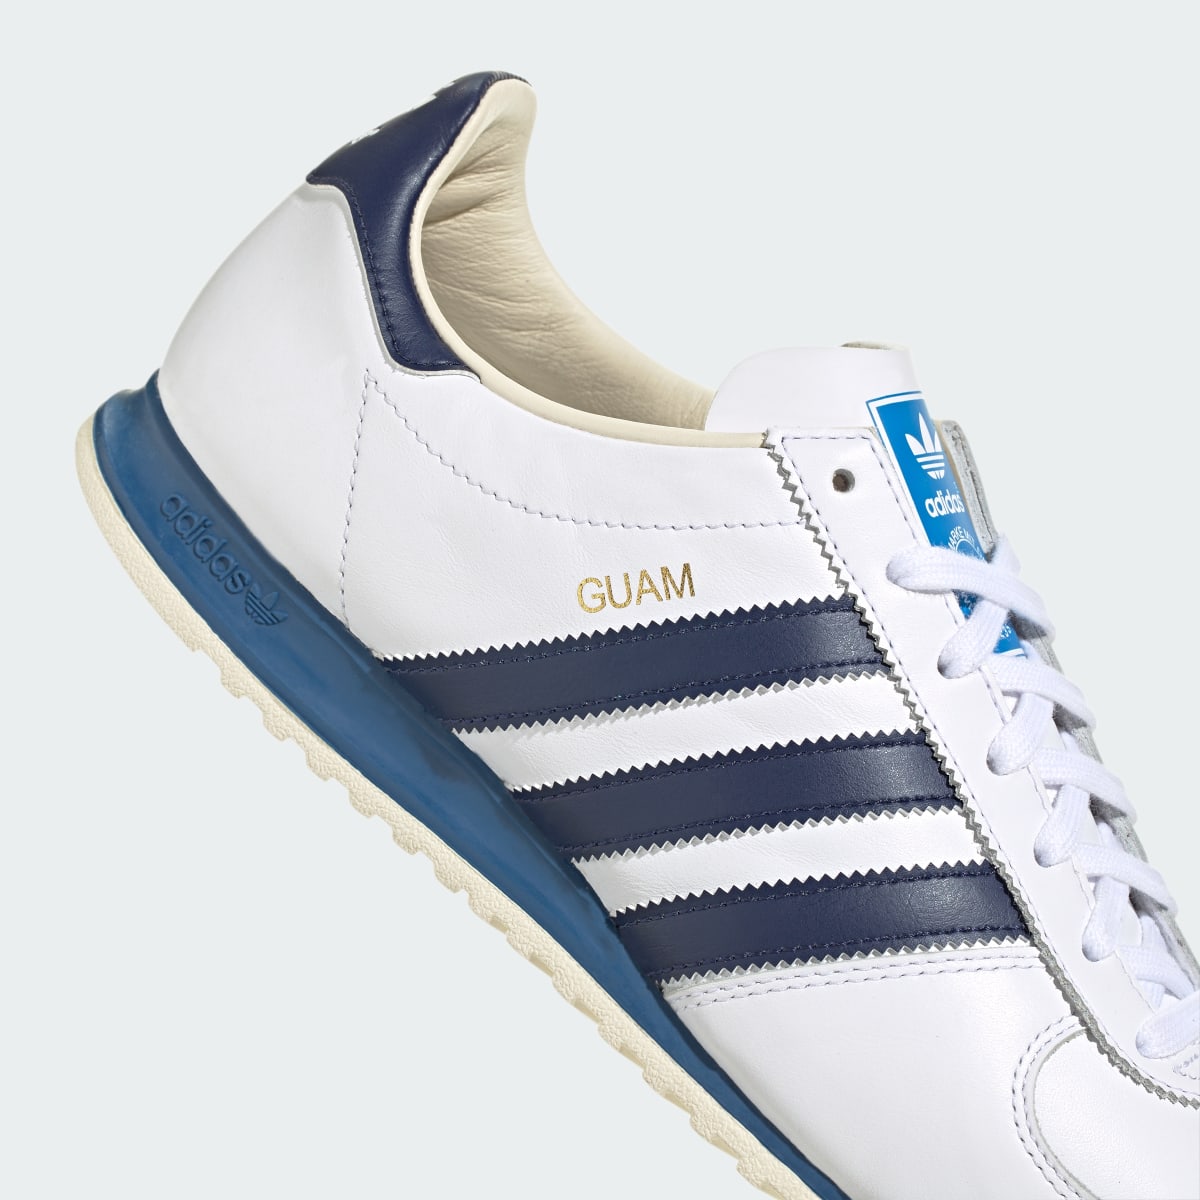 Adidas Guam Shoes. 10